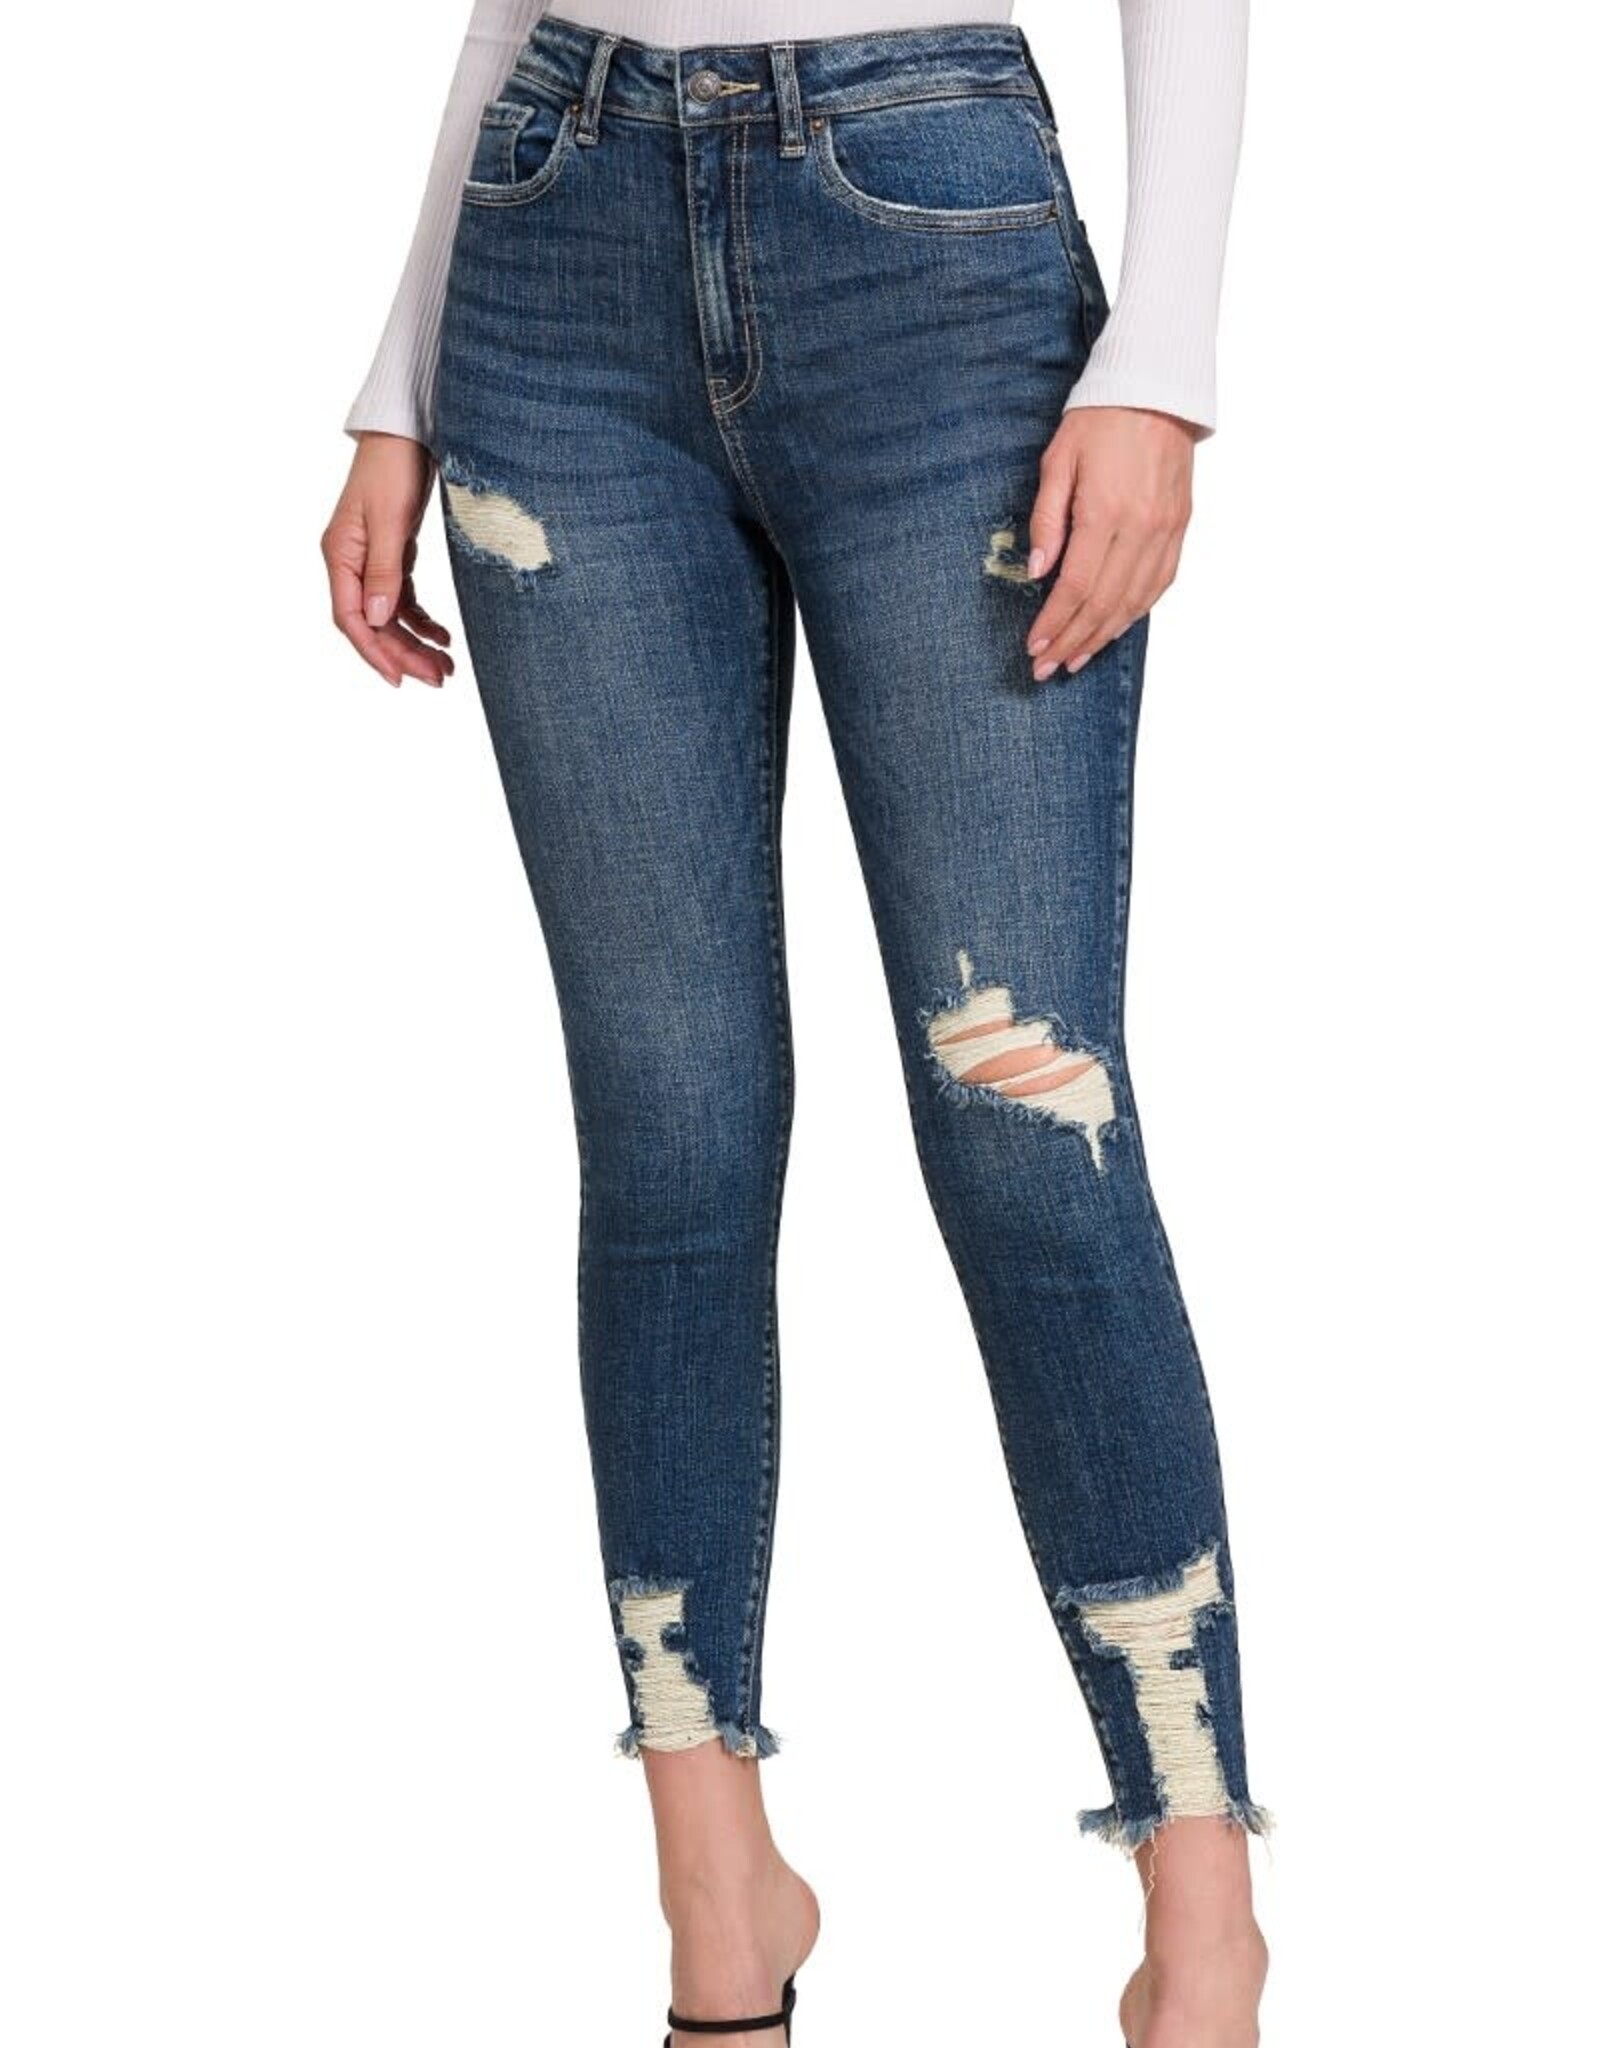 - Medium Blue Washed Distressed Skinny Jean